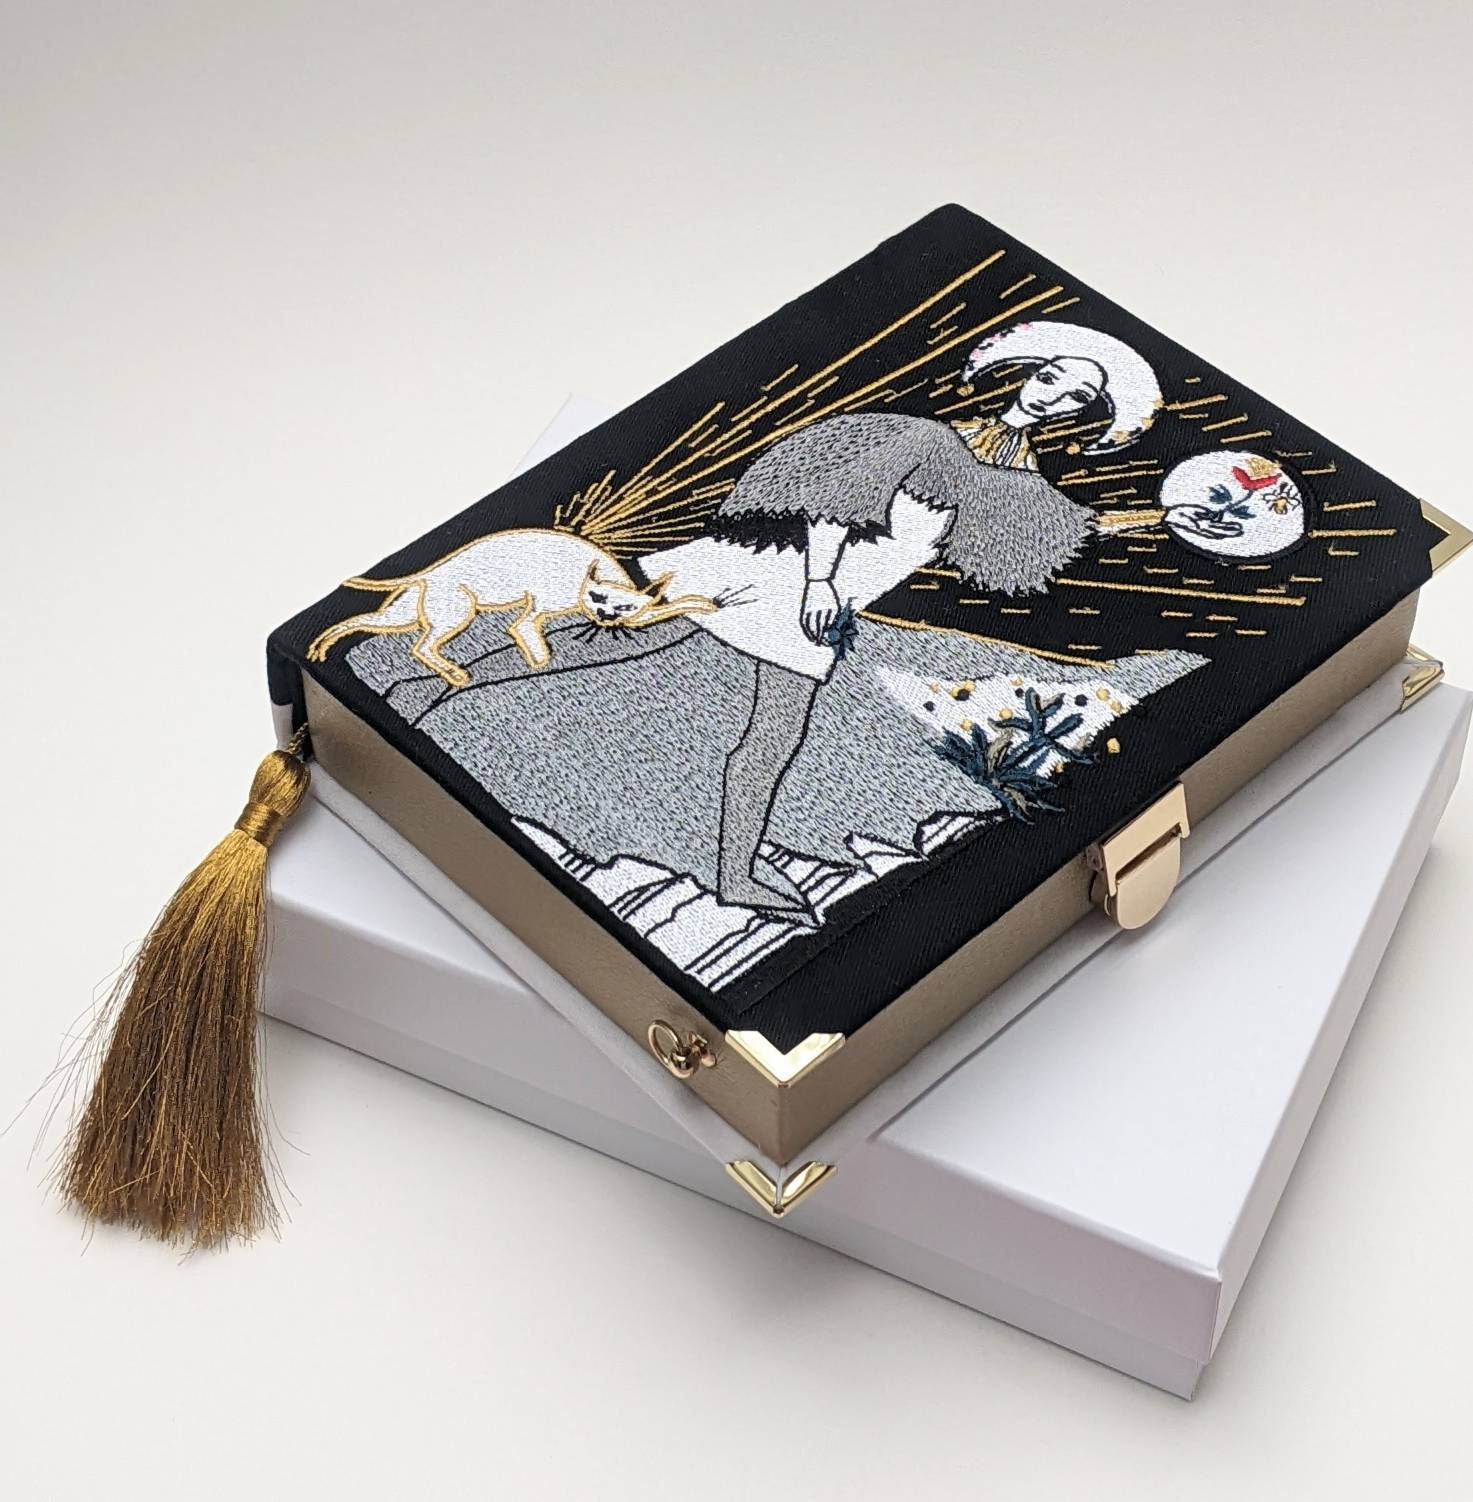 13x18cm Tarot karte Aufbewahrung tasche Samt doppelseitig bedruckte Kordel  zug Tasche Wohn accessoires Geschenk Tarot Aufbewahrung